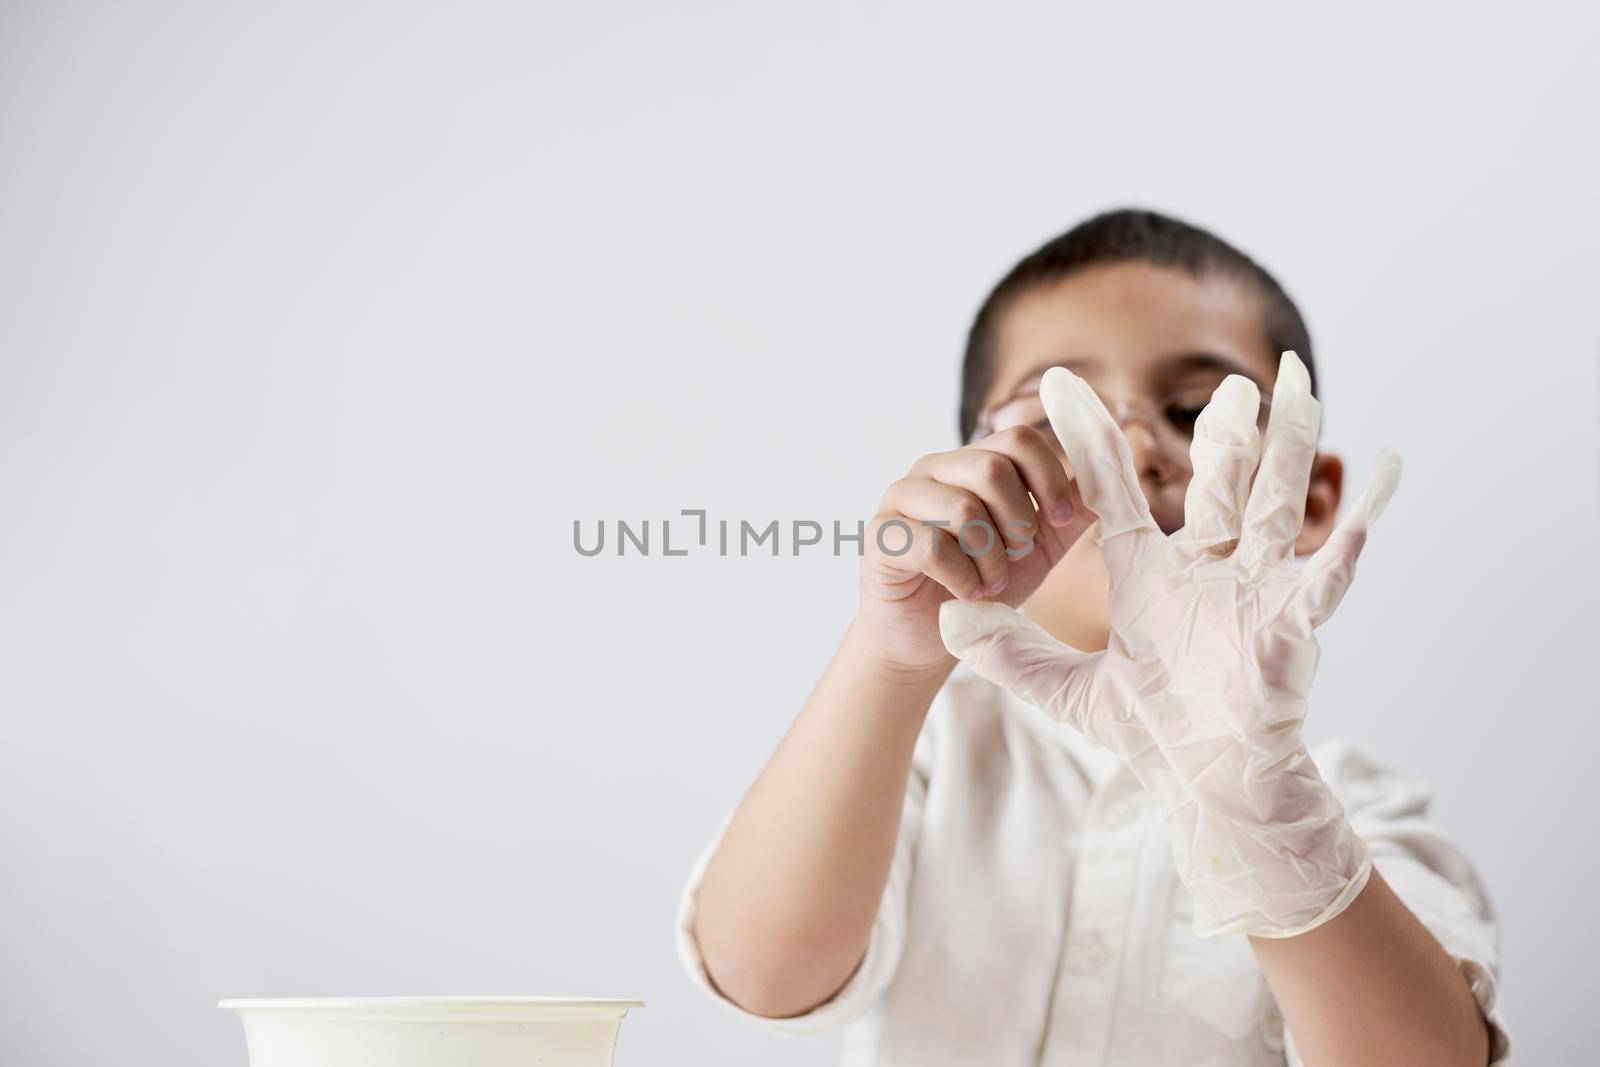 A boy wearing medical gloves by golibtolibov